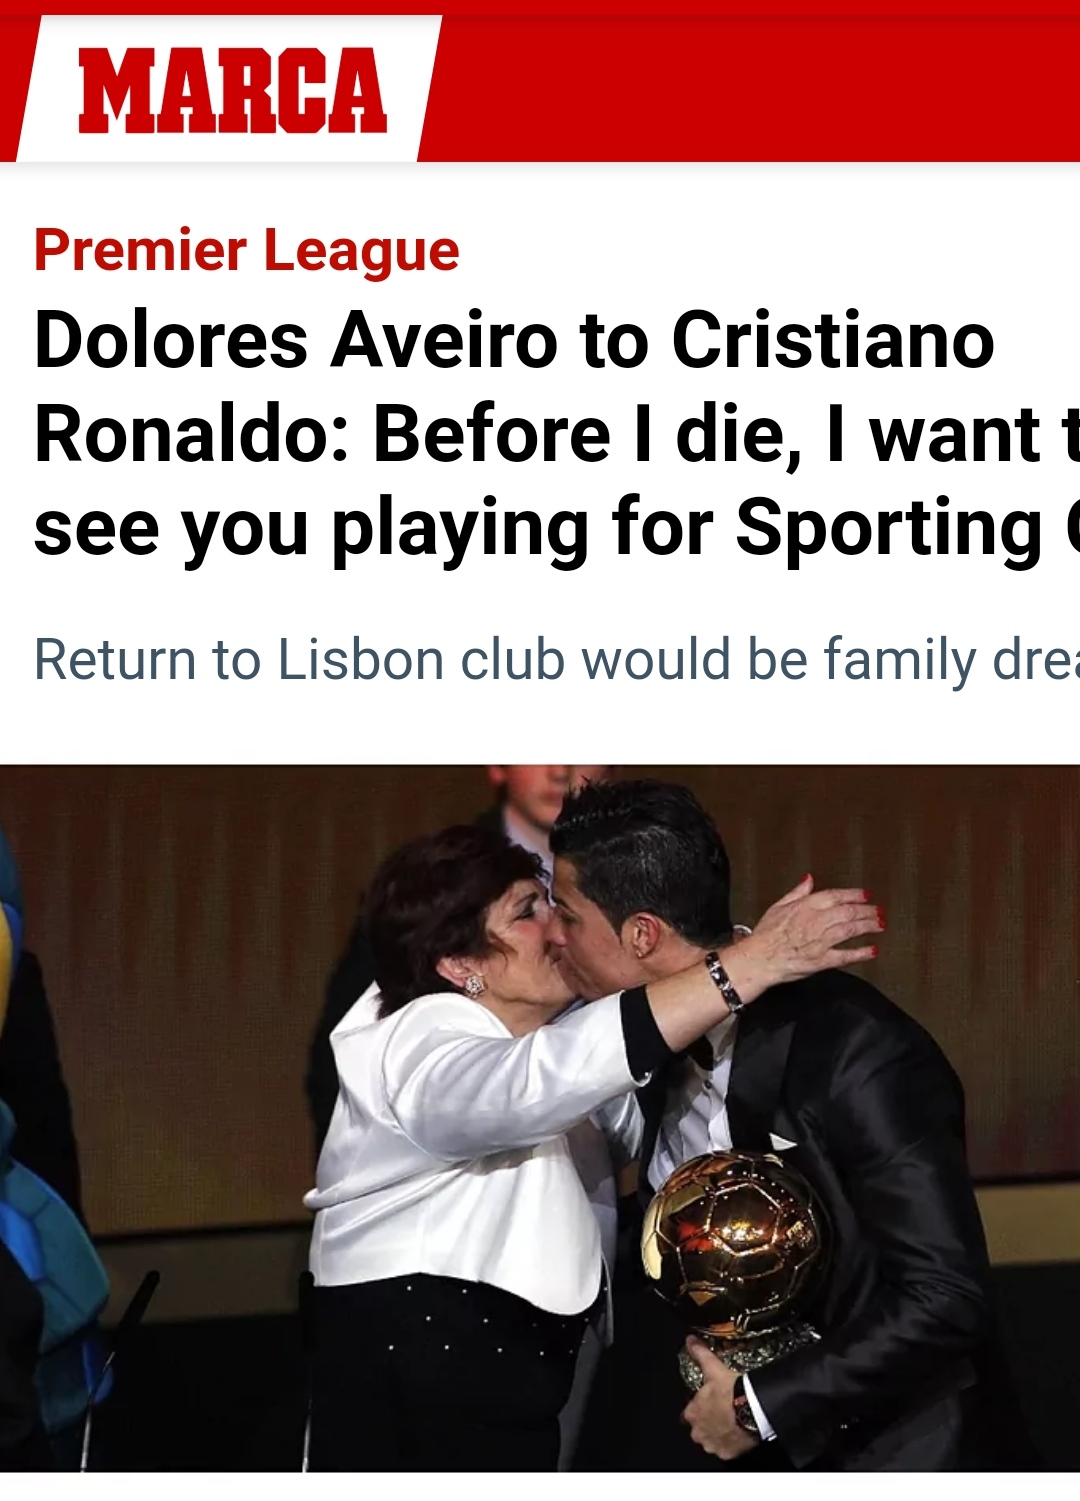 Ronaldo news from Marca newspaper